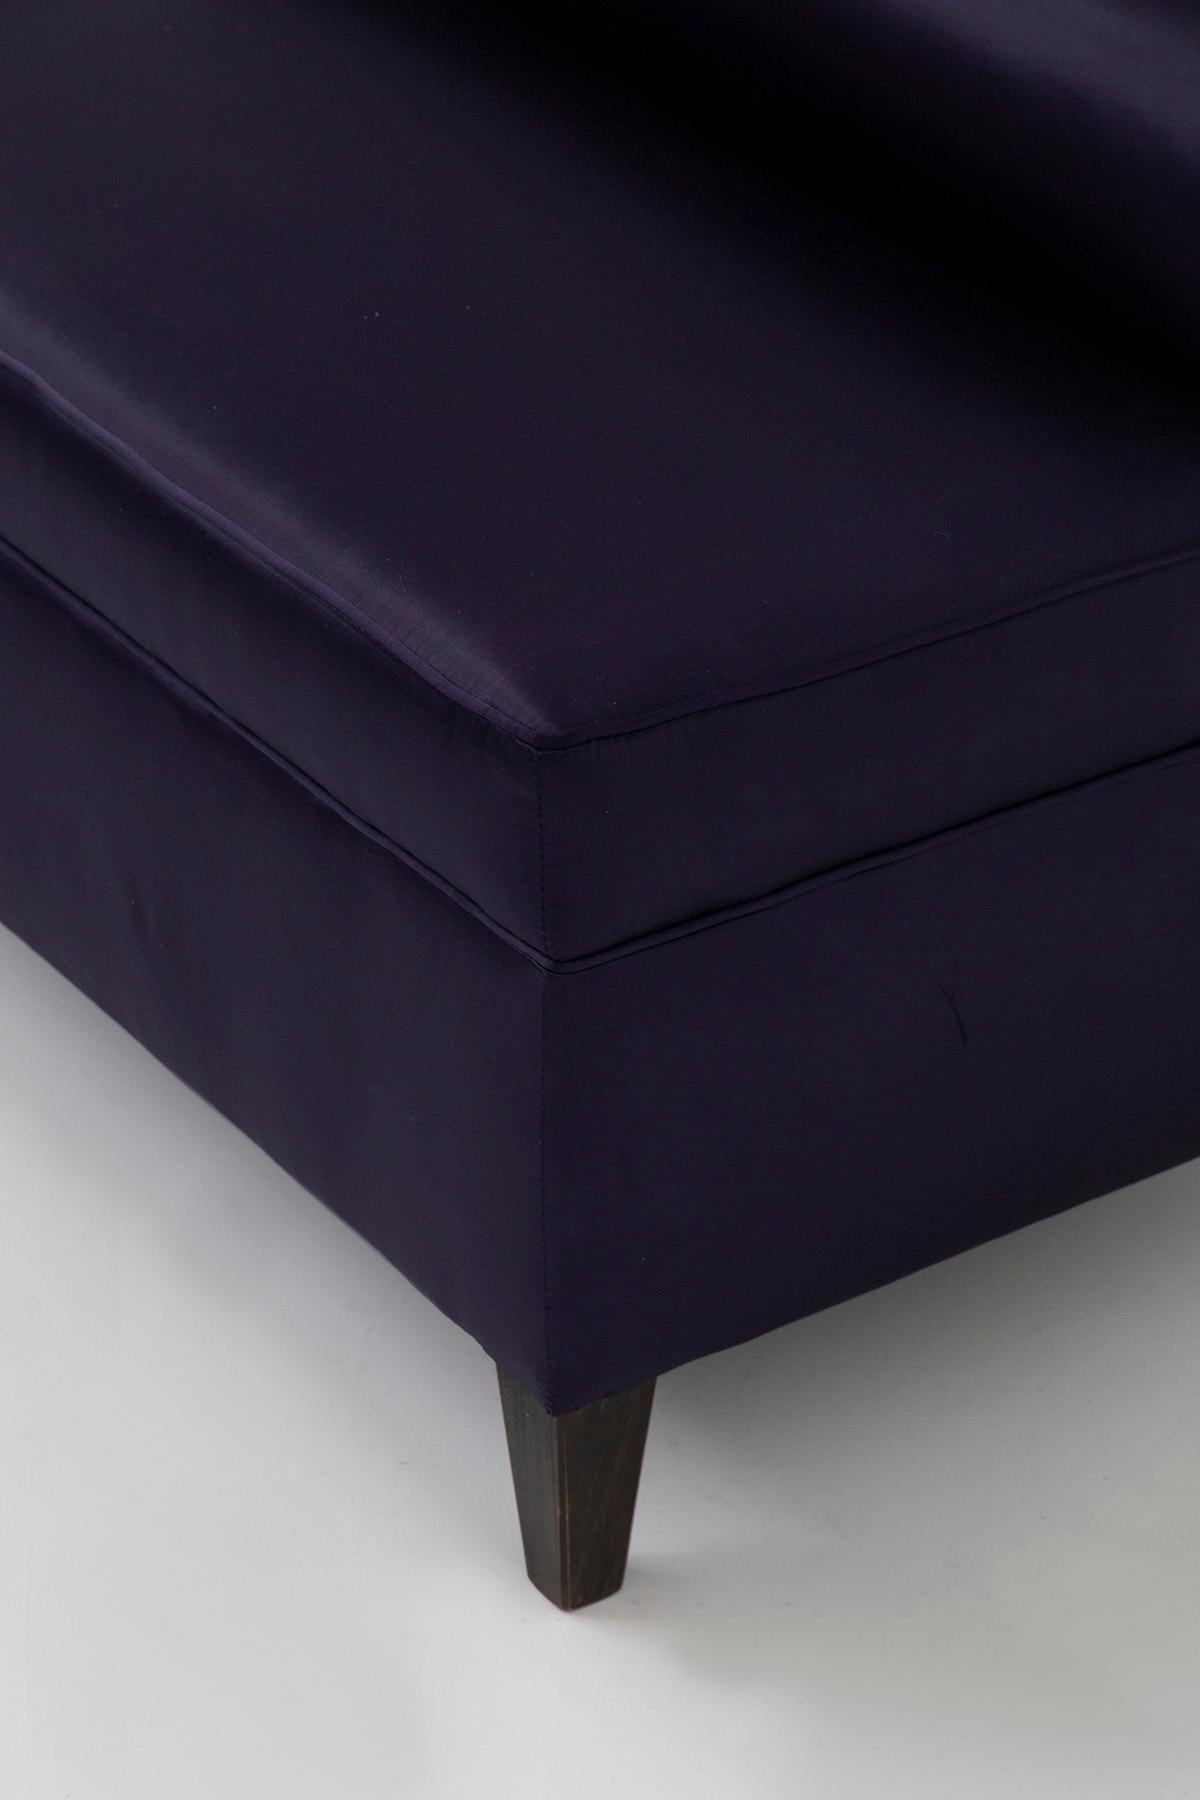 20th Century Small Italian Purple Satin Sofa with Roll Cushion For Sale